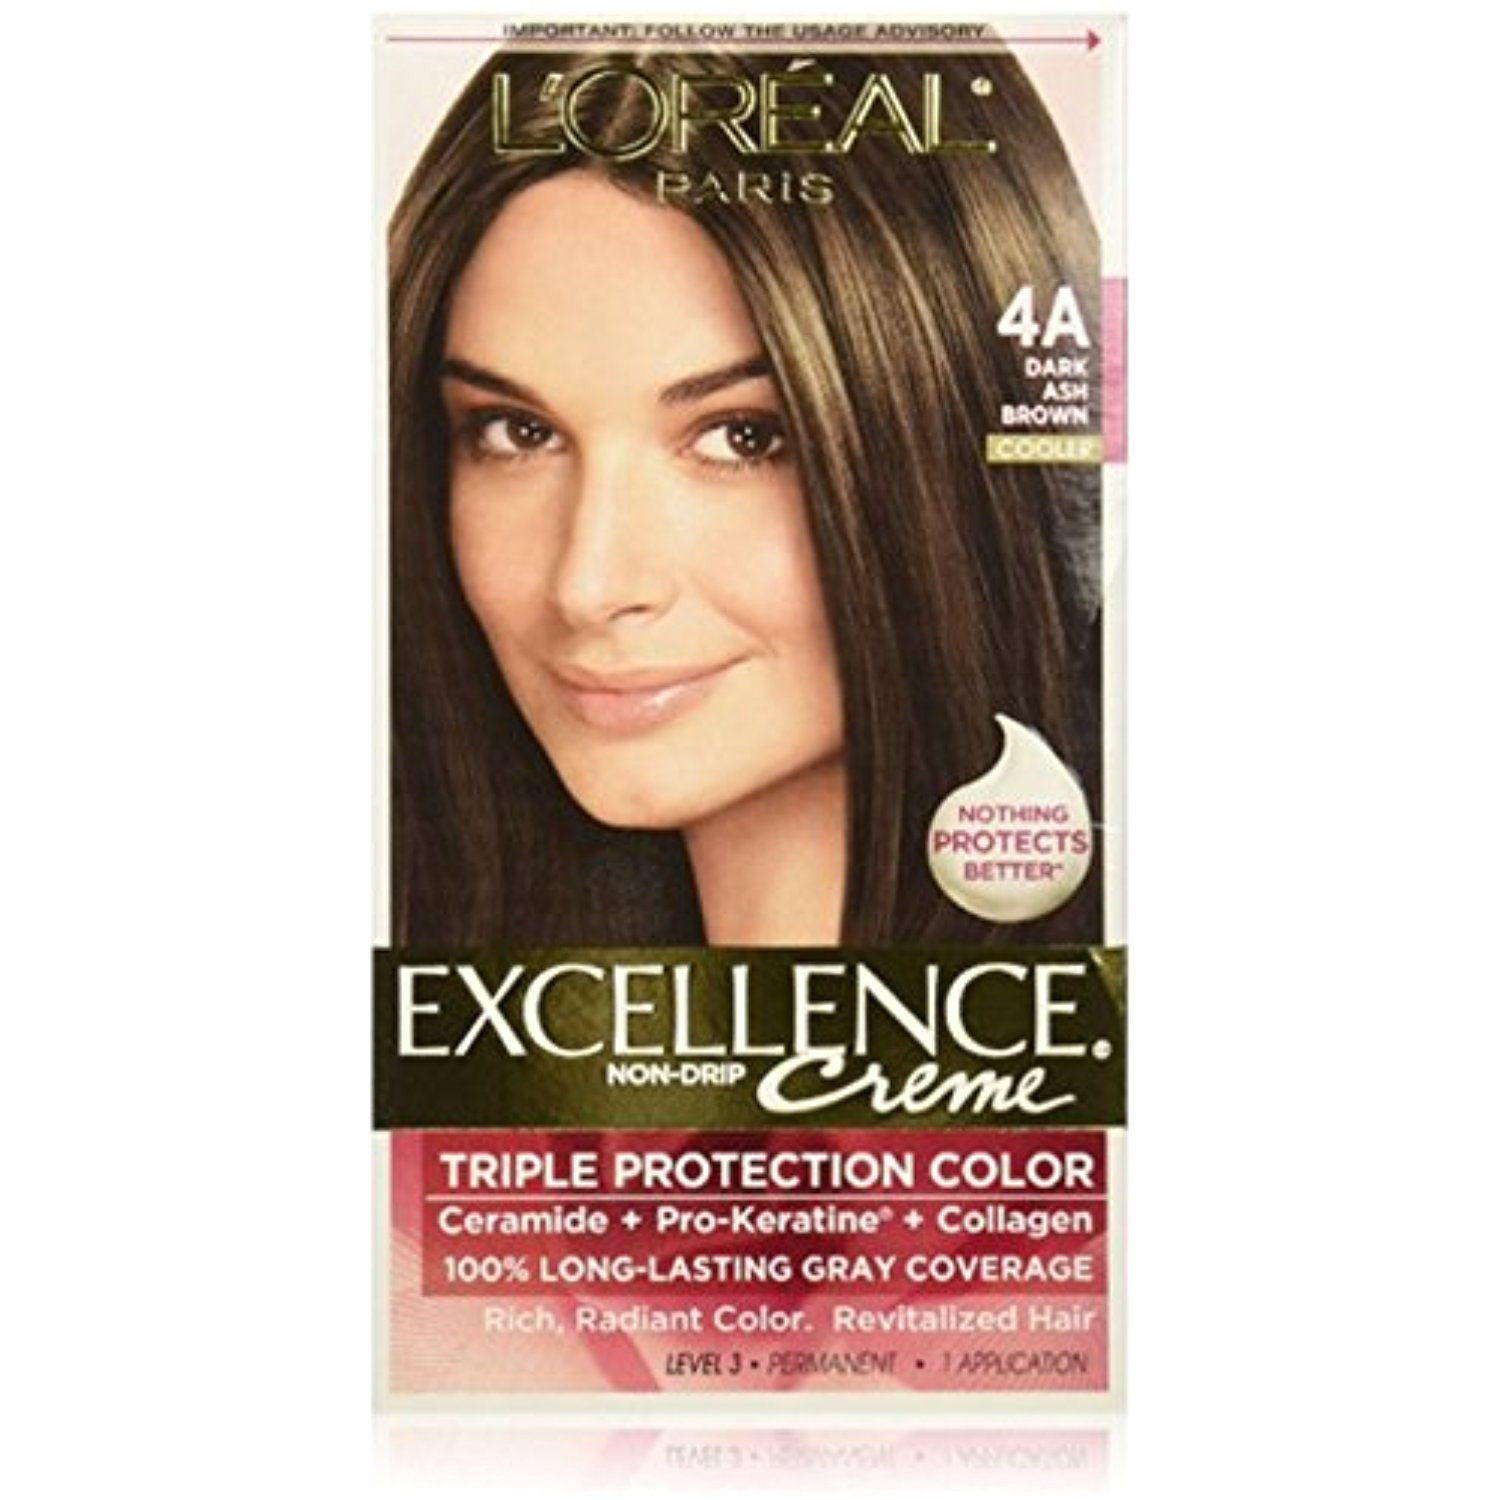 Loreal Professional Hair Colour Shade Card | williamson-ga.us